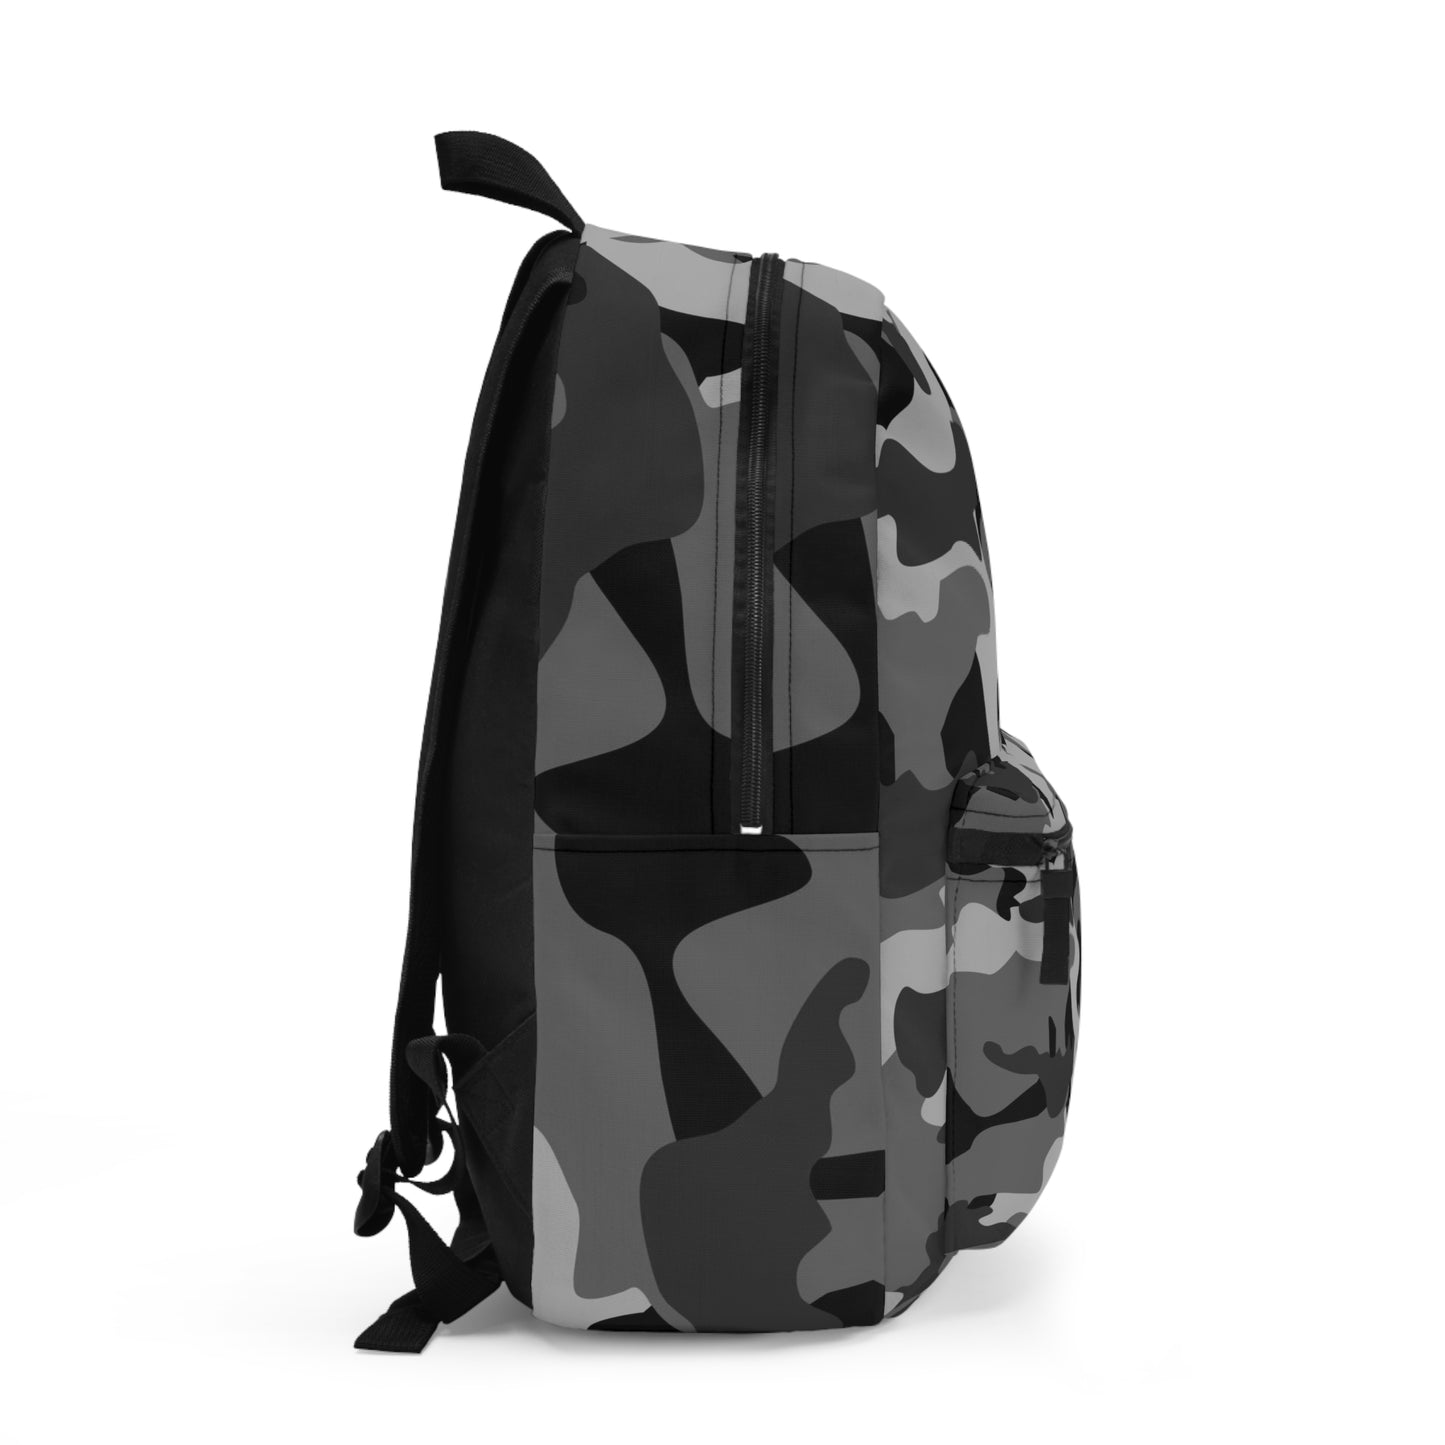 Black Camo School Backpack, Travel College Backpack, Cool Backpack for Boys, Girls, Backpack Aesthetics